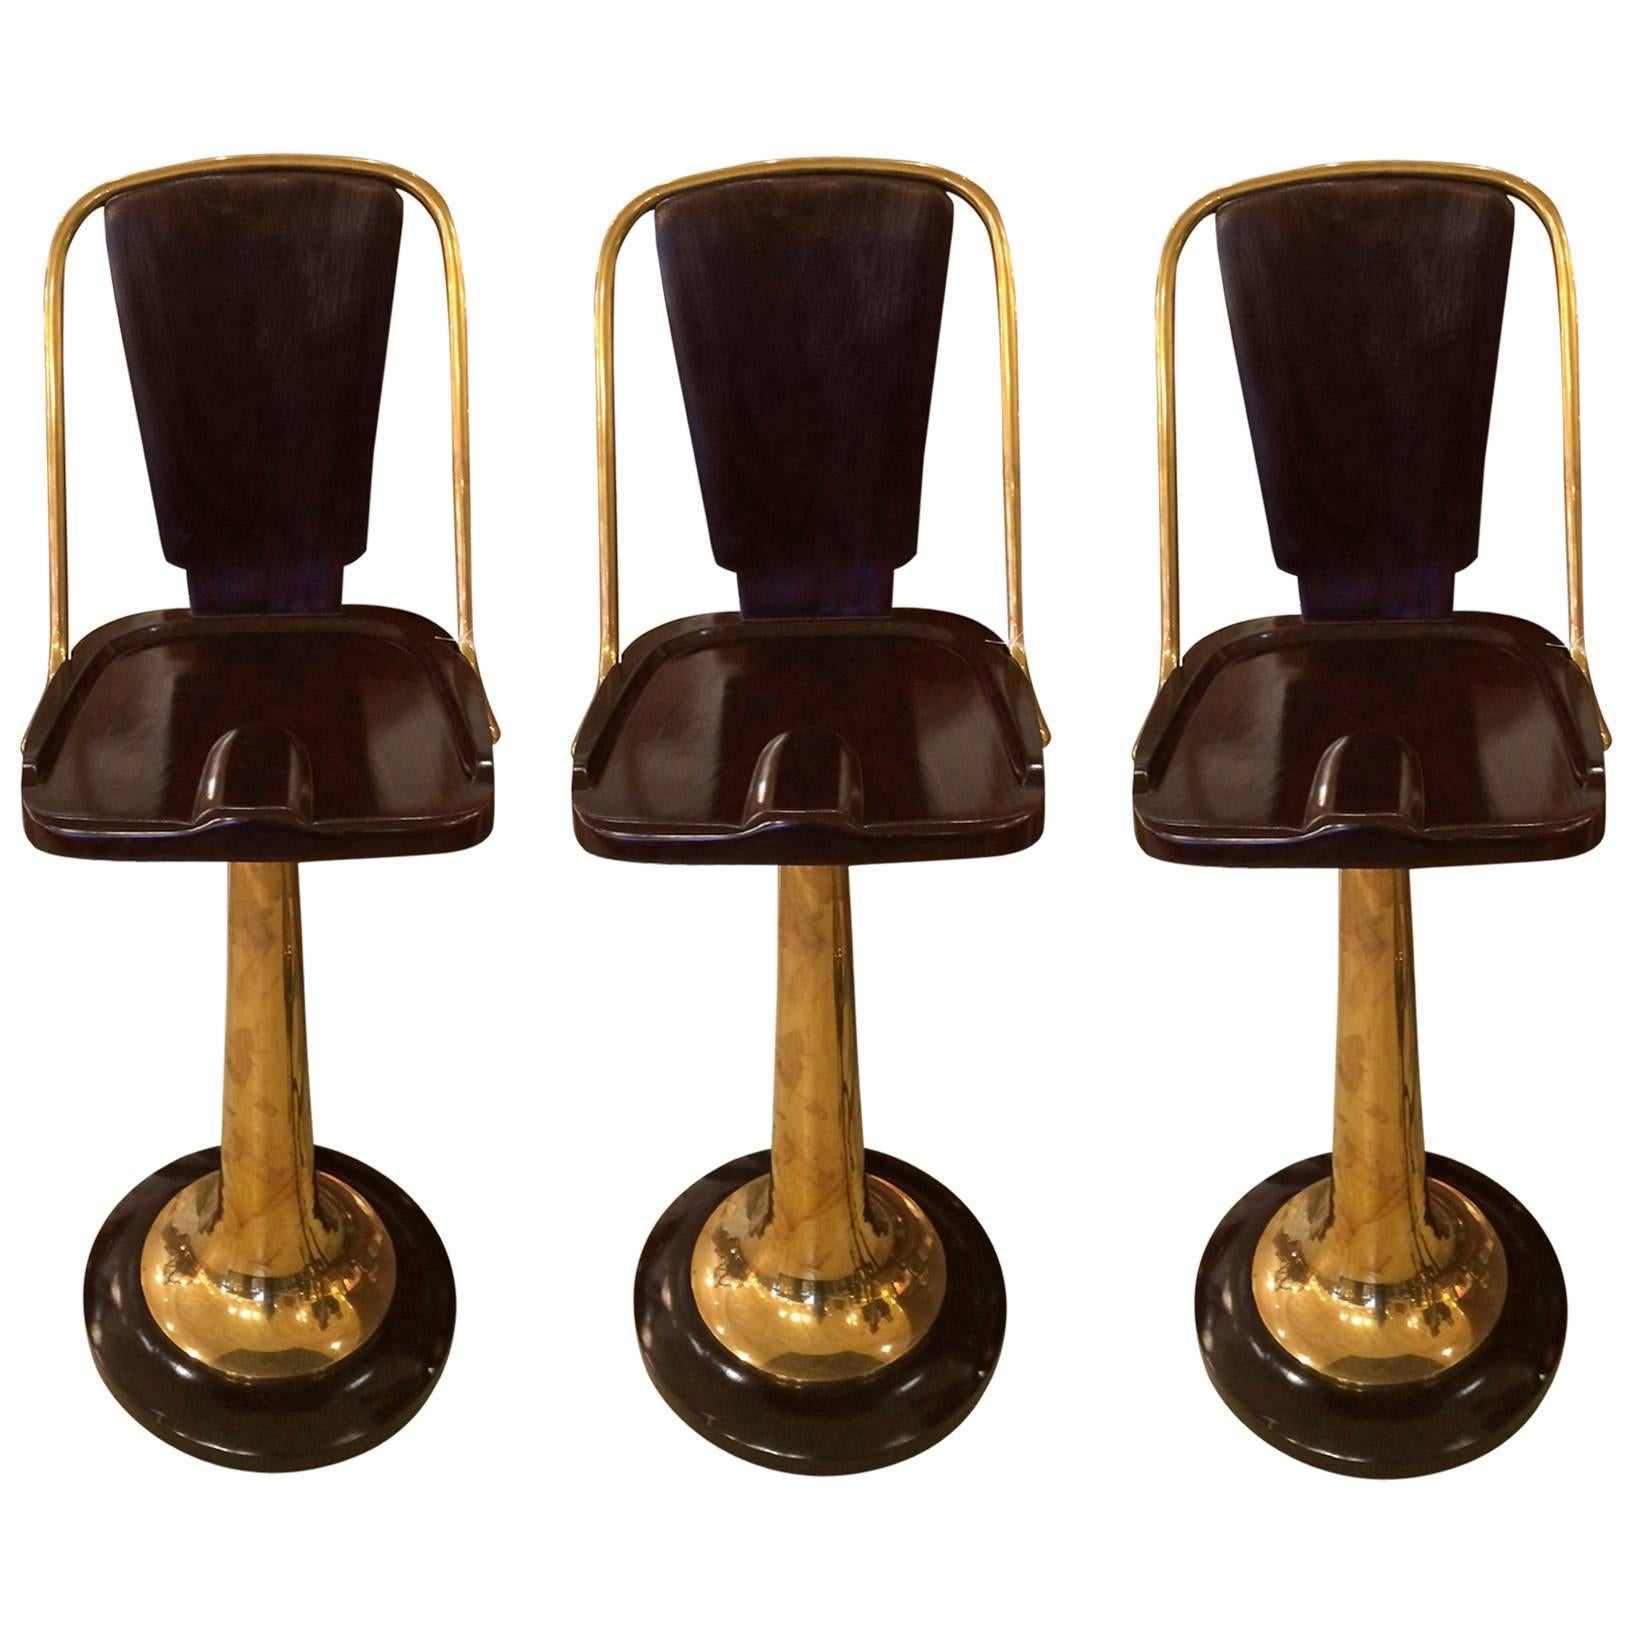 Three Art Deco Mahogany and Brass Bar or Counter Stools